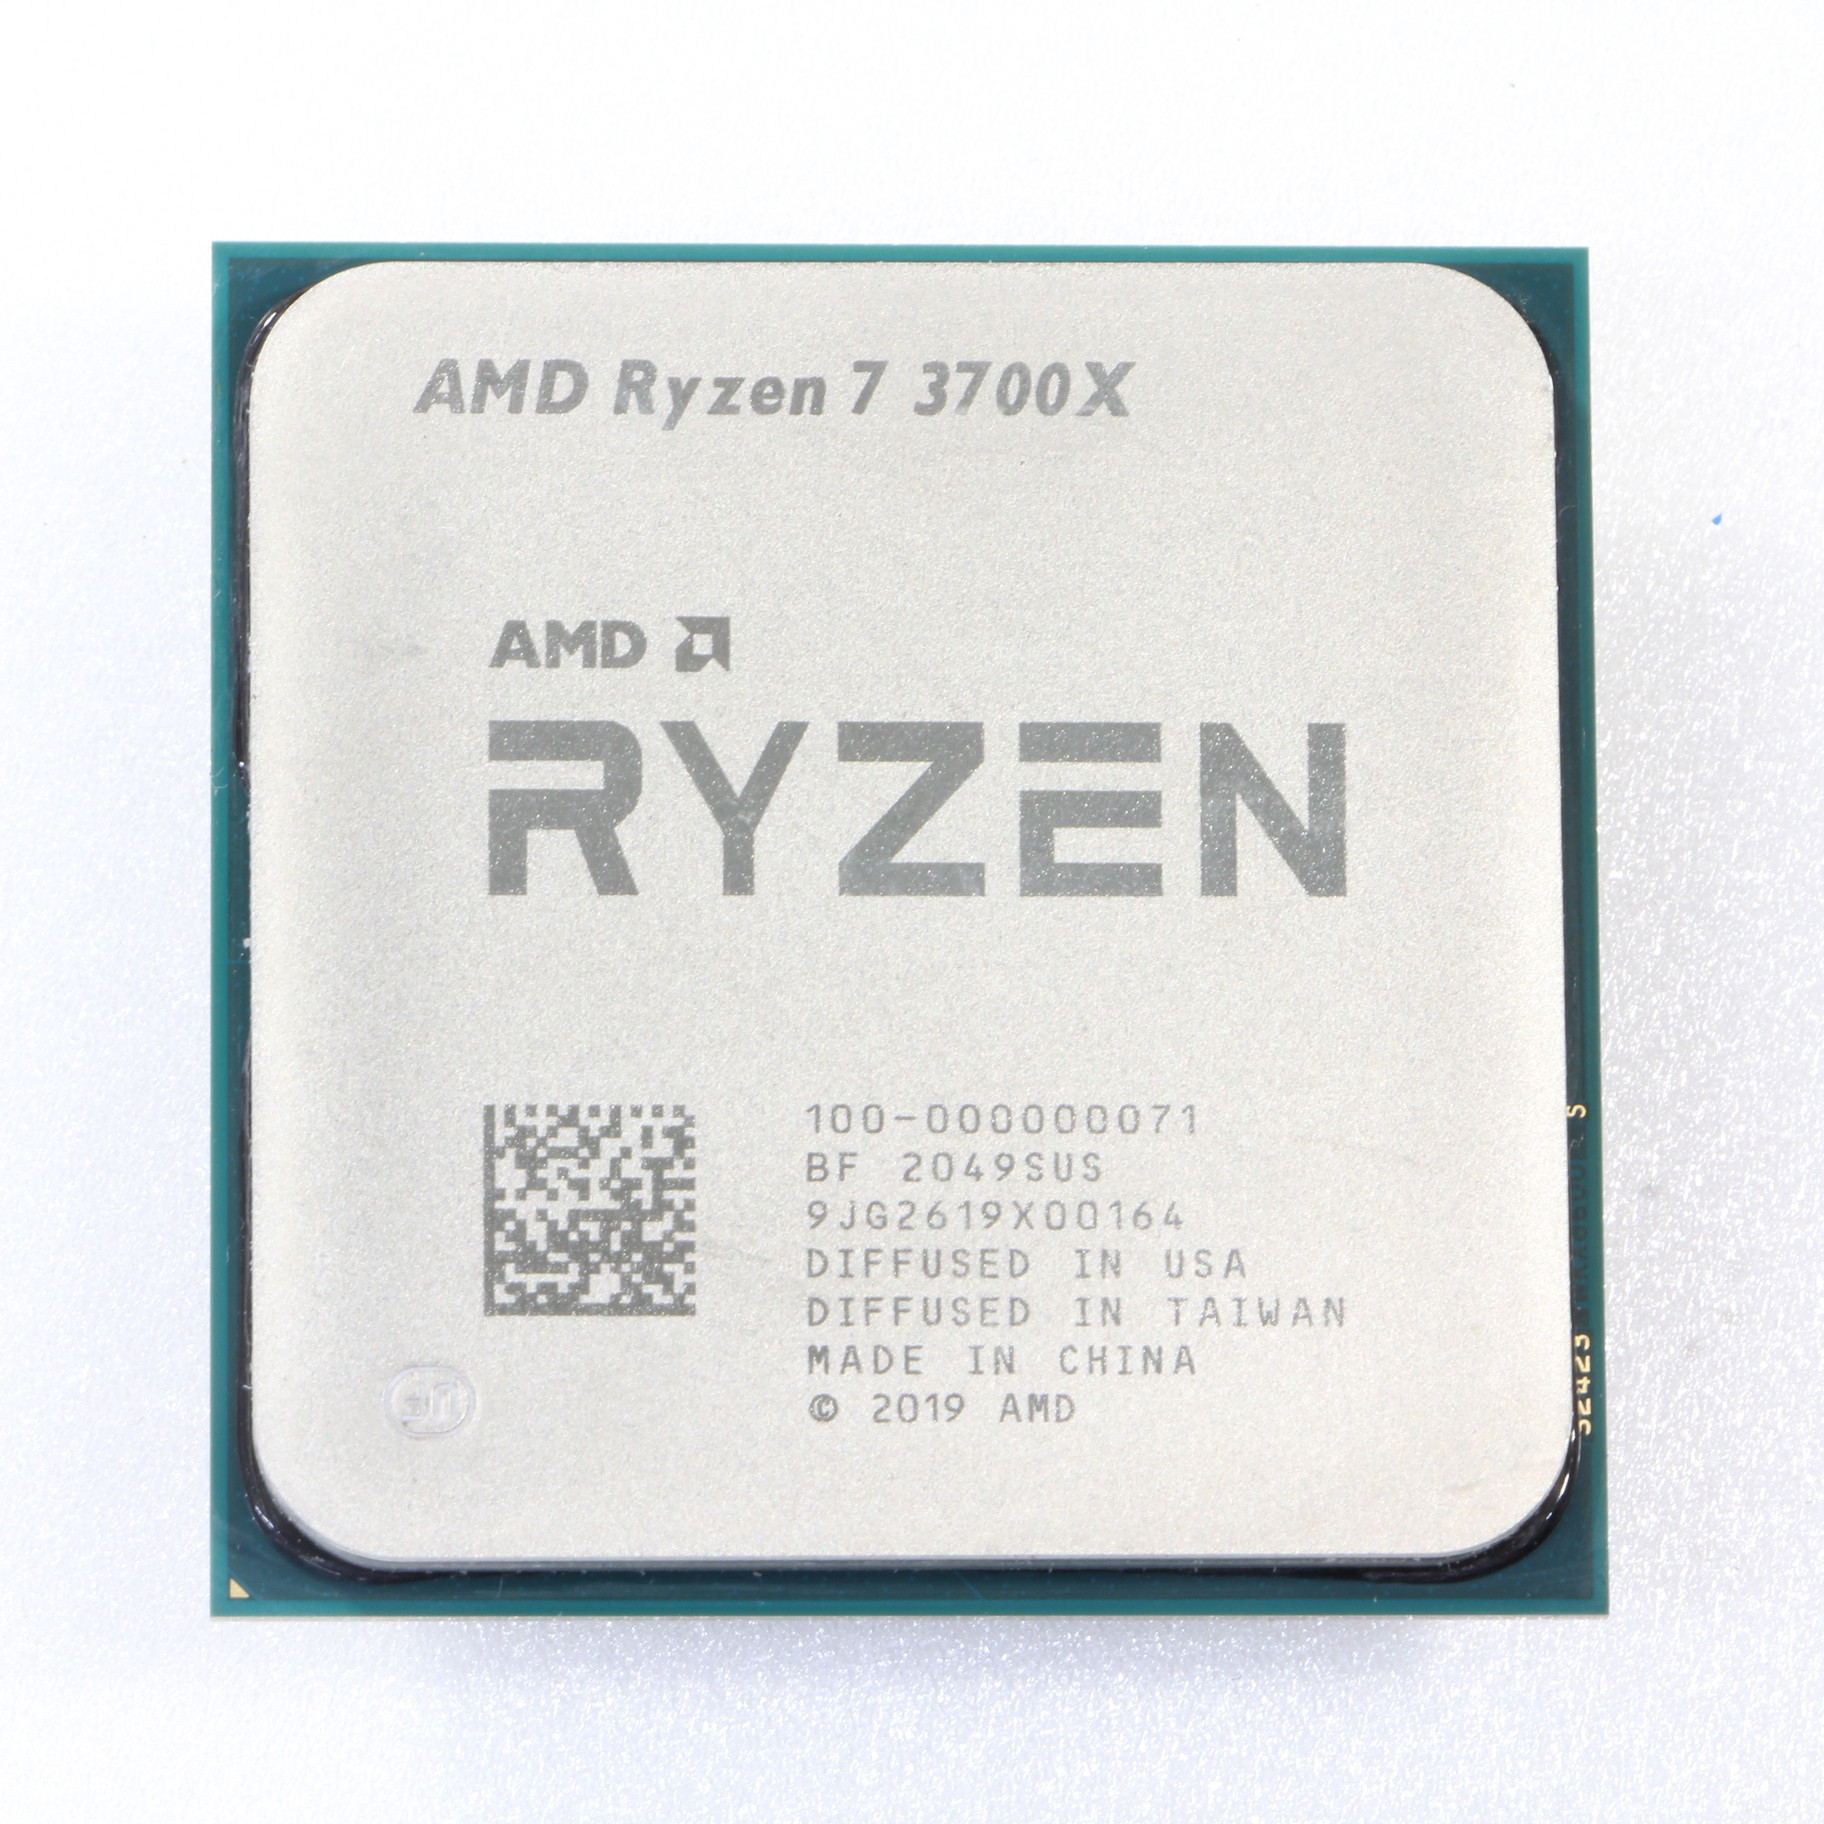 AMD ryzen 7 3700x